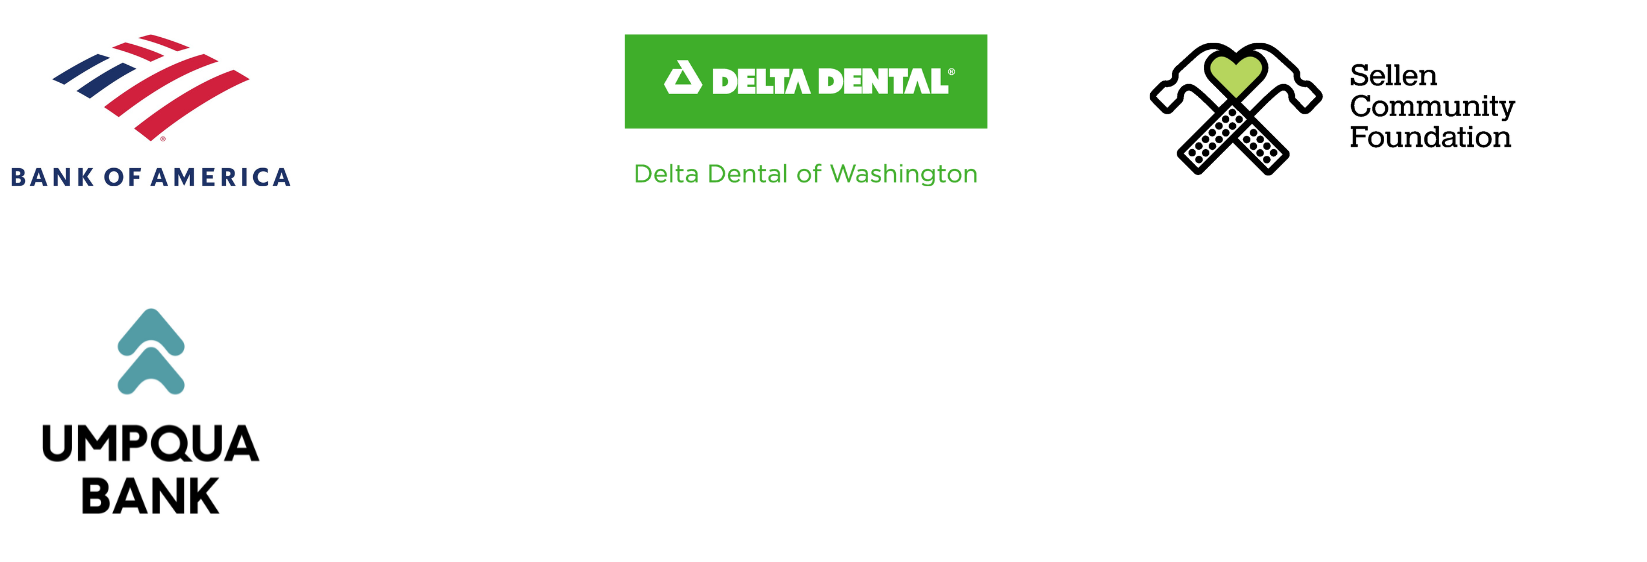 Bank of America, Delta Dental of Washington, Umpqua Bank, and Sellen Community Foundation logos